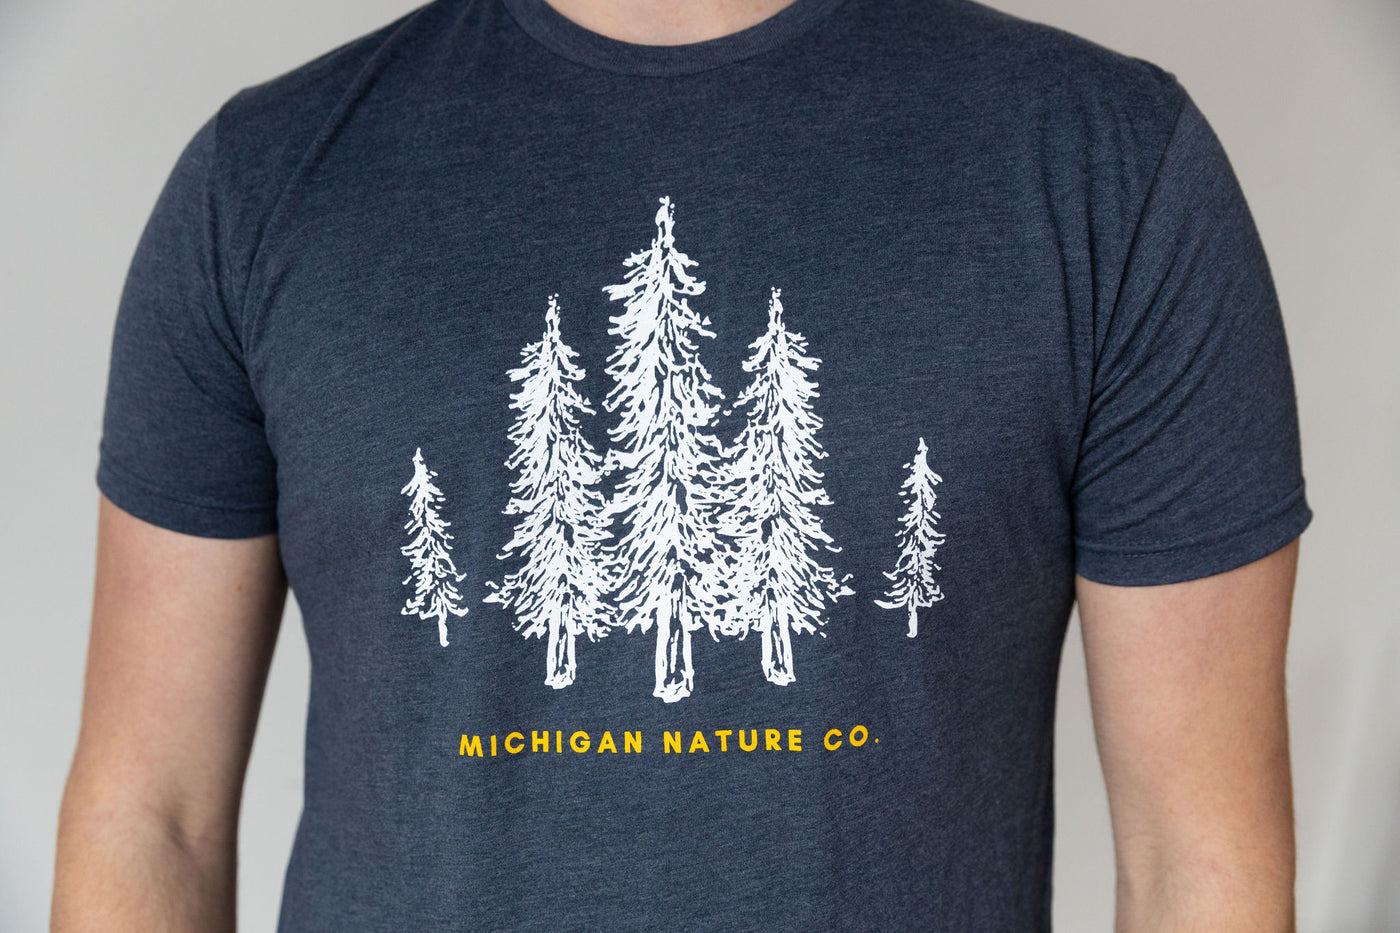 Michigan Nature Co. Tee